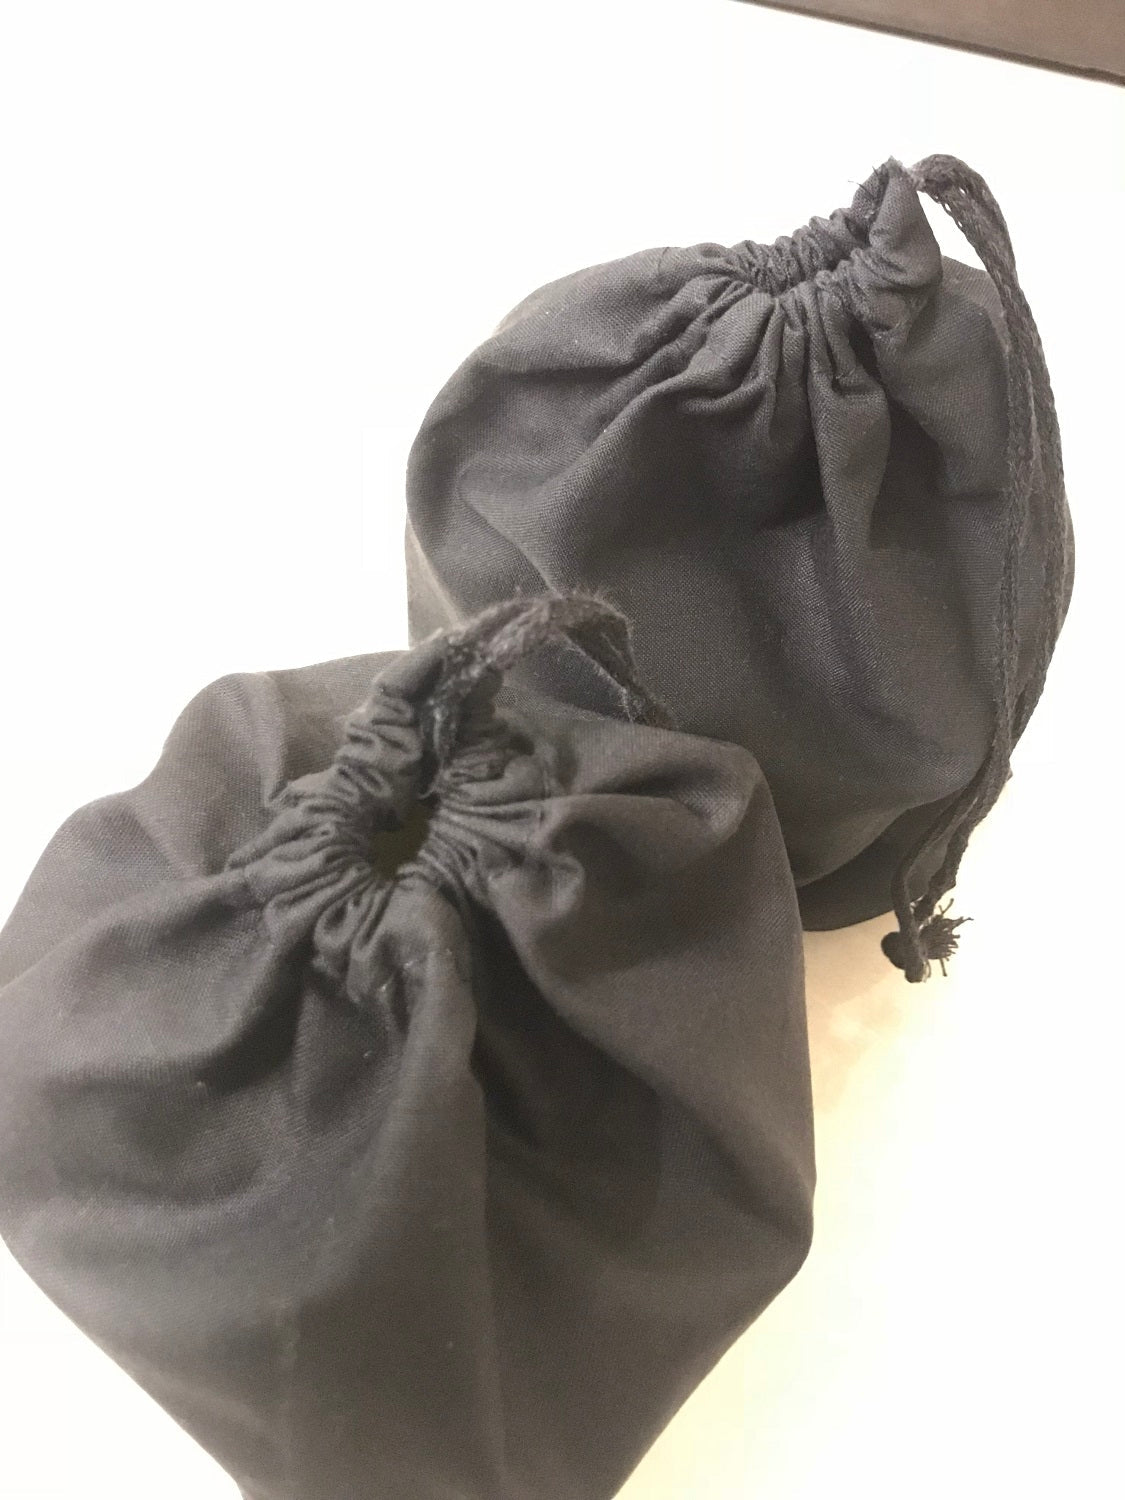 6x10 Inches Reusable Eco-Friendly Cotton Single Drawstring Bags Black Color